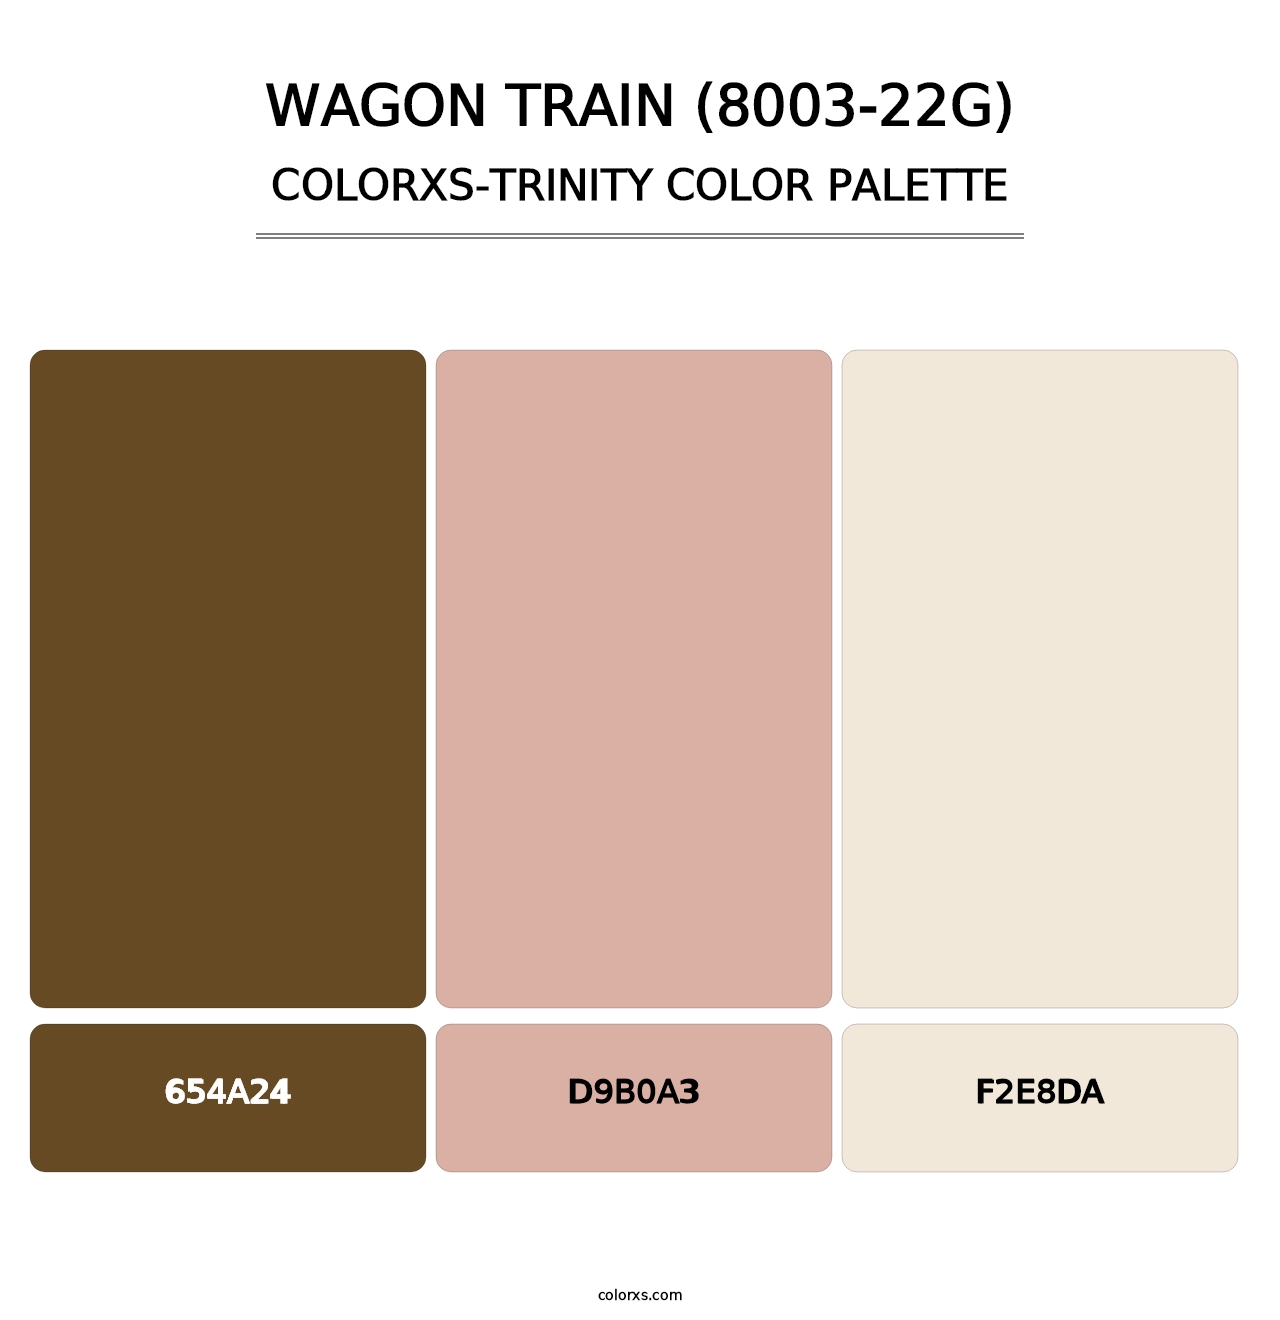 Wagon Train (8003-22G) - Colorxs Trinity Palette